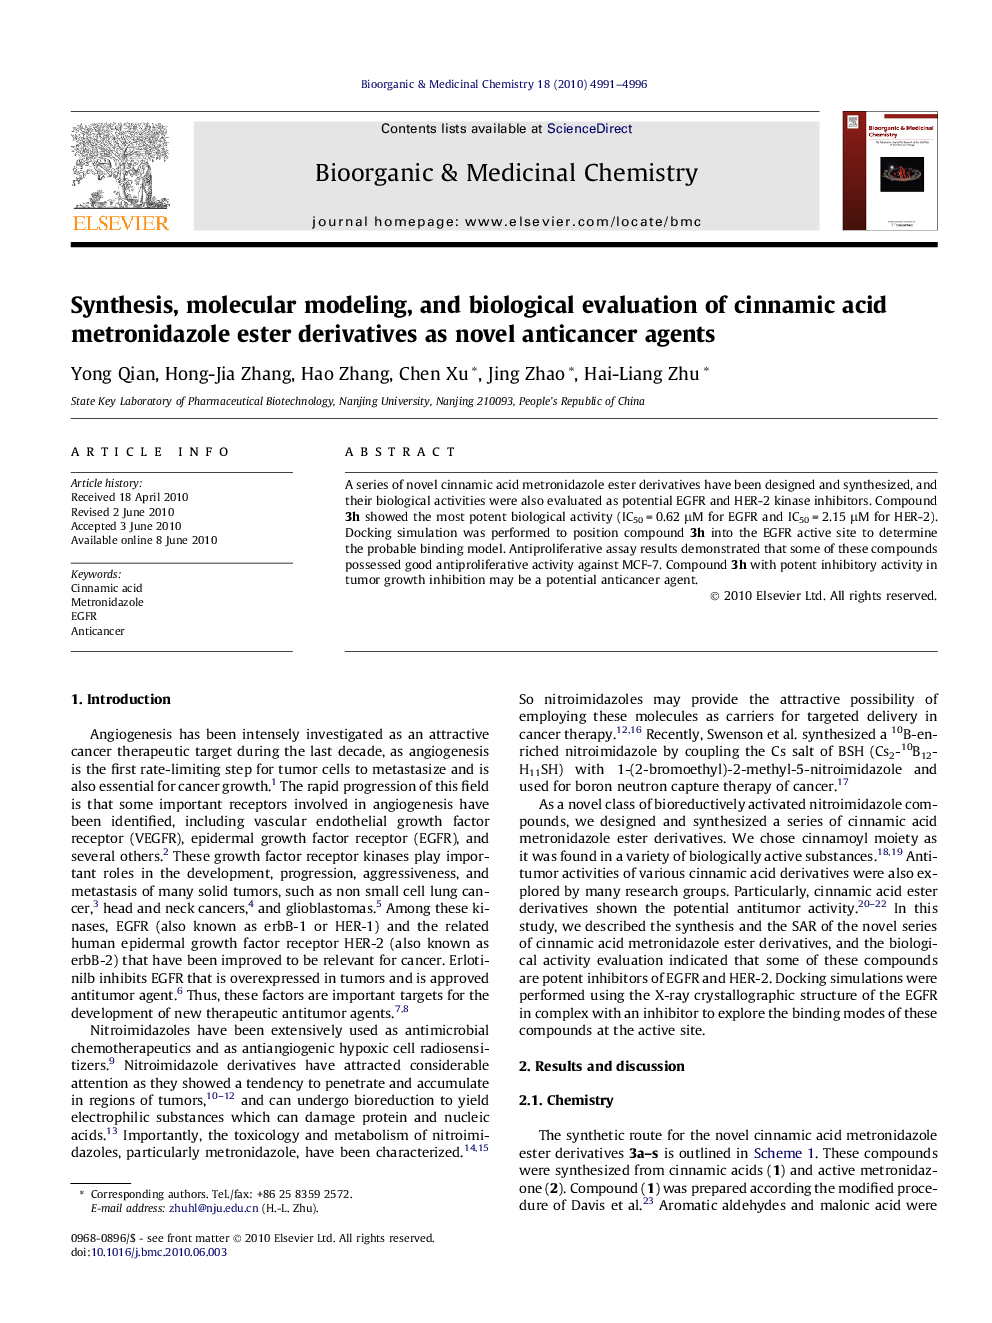 Synthesis, molecular modeling, and biological evaluation of cinnamic acid metronidazole ester derivatives as novel anticancer agents